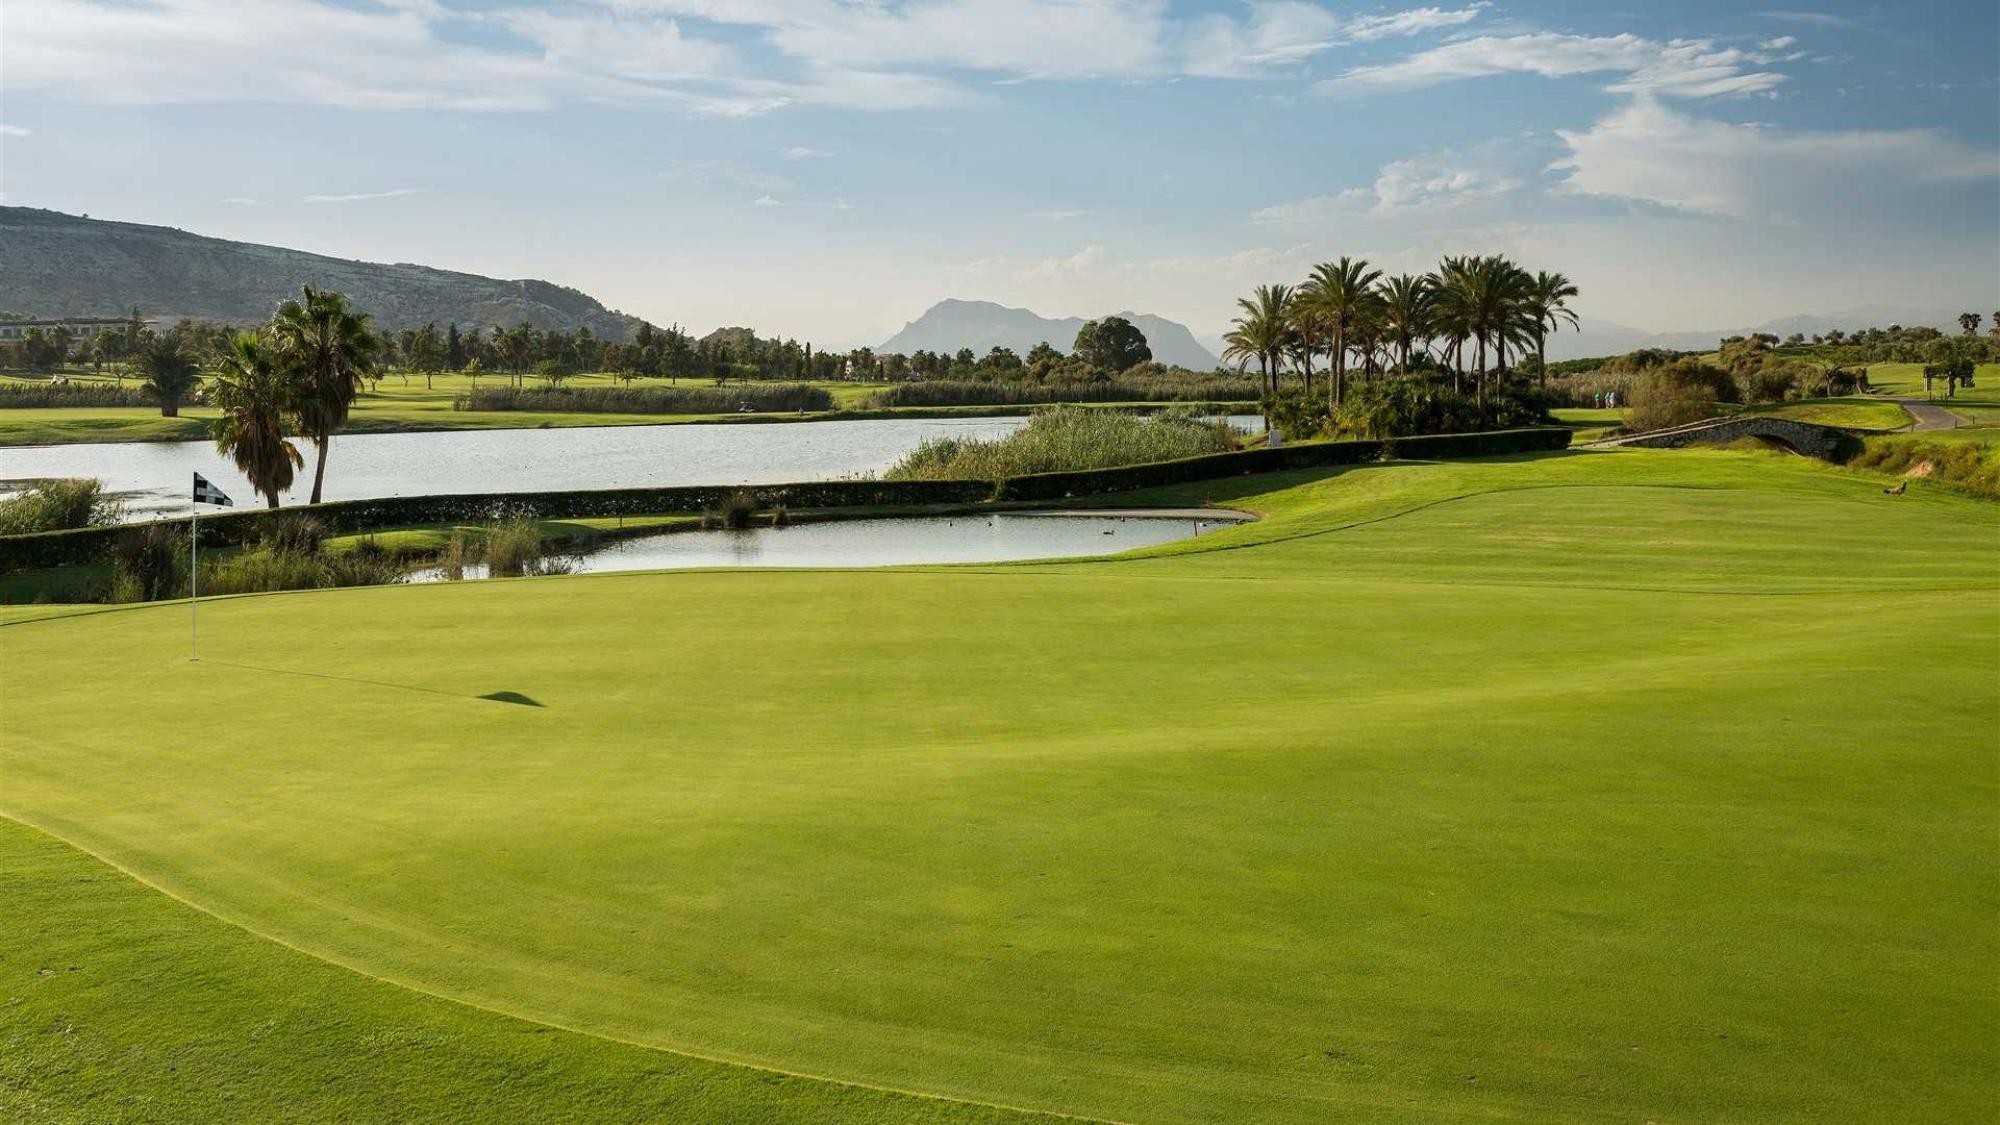 The Las Ramblas Golf Course's beautiful golf course in striking Costa Blanca.